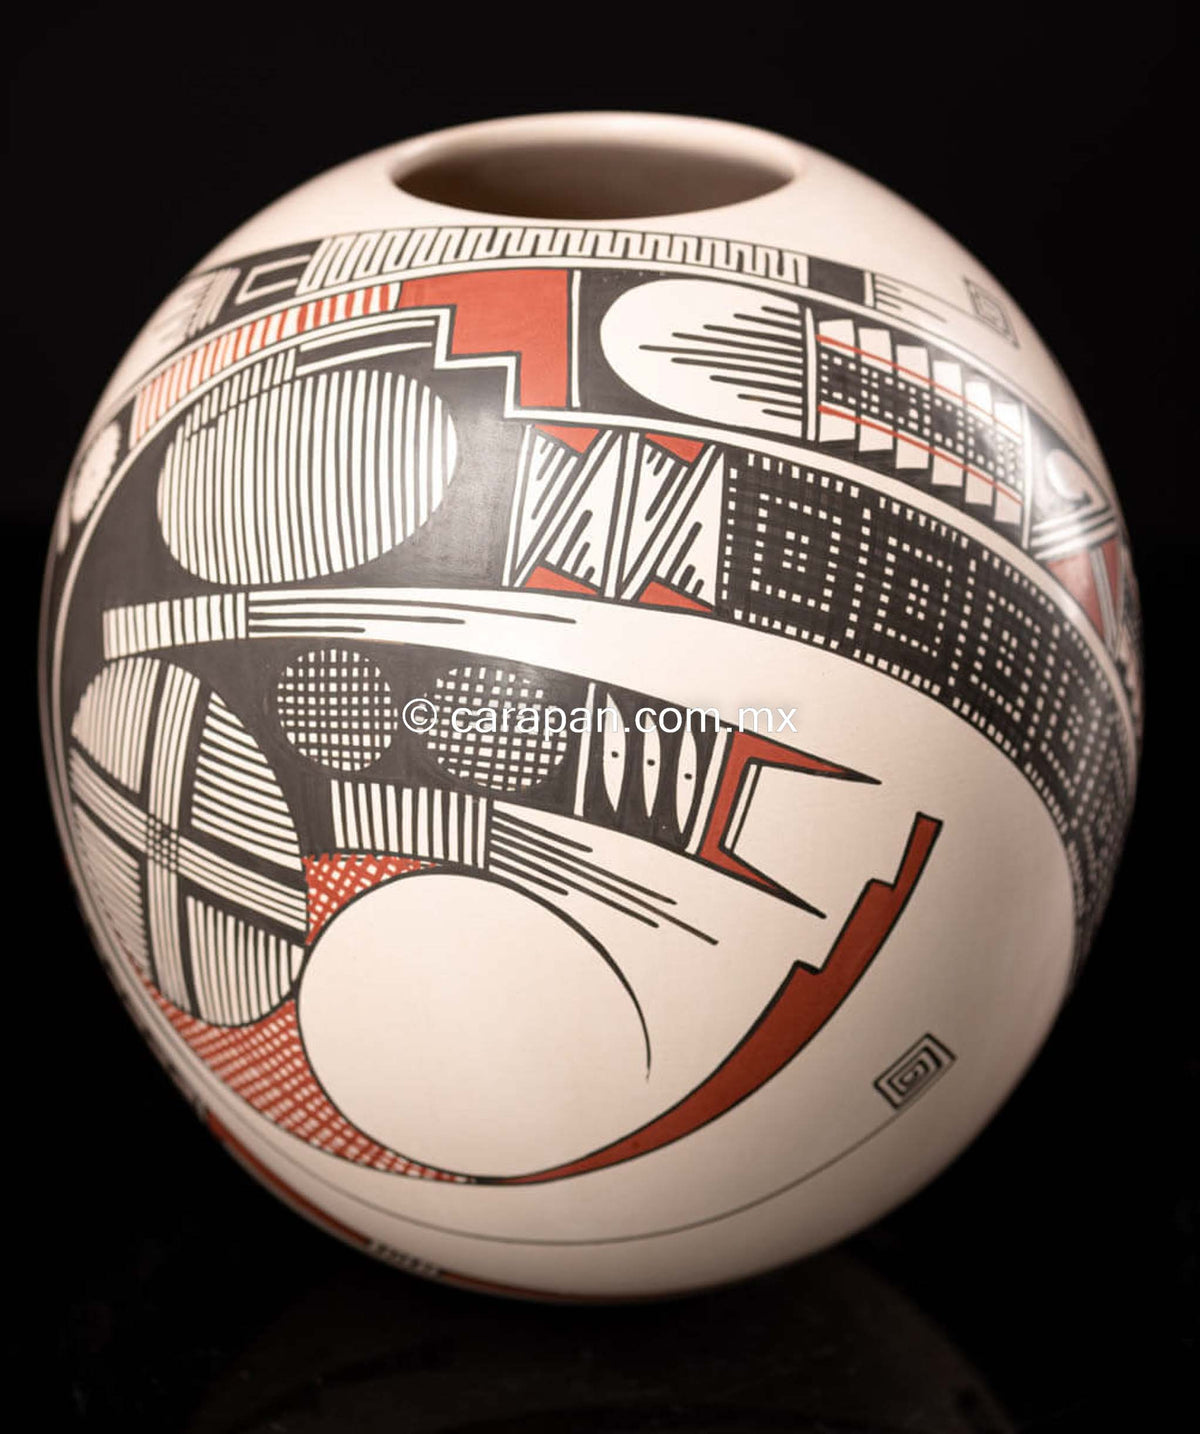 Mata Ortiz Ceramic White Sphere Pot Mexican Folk Art